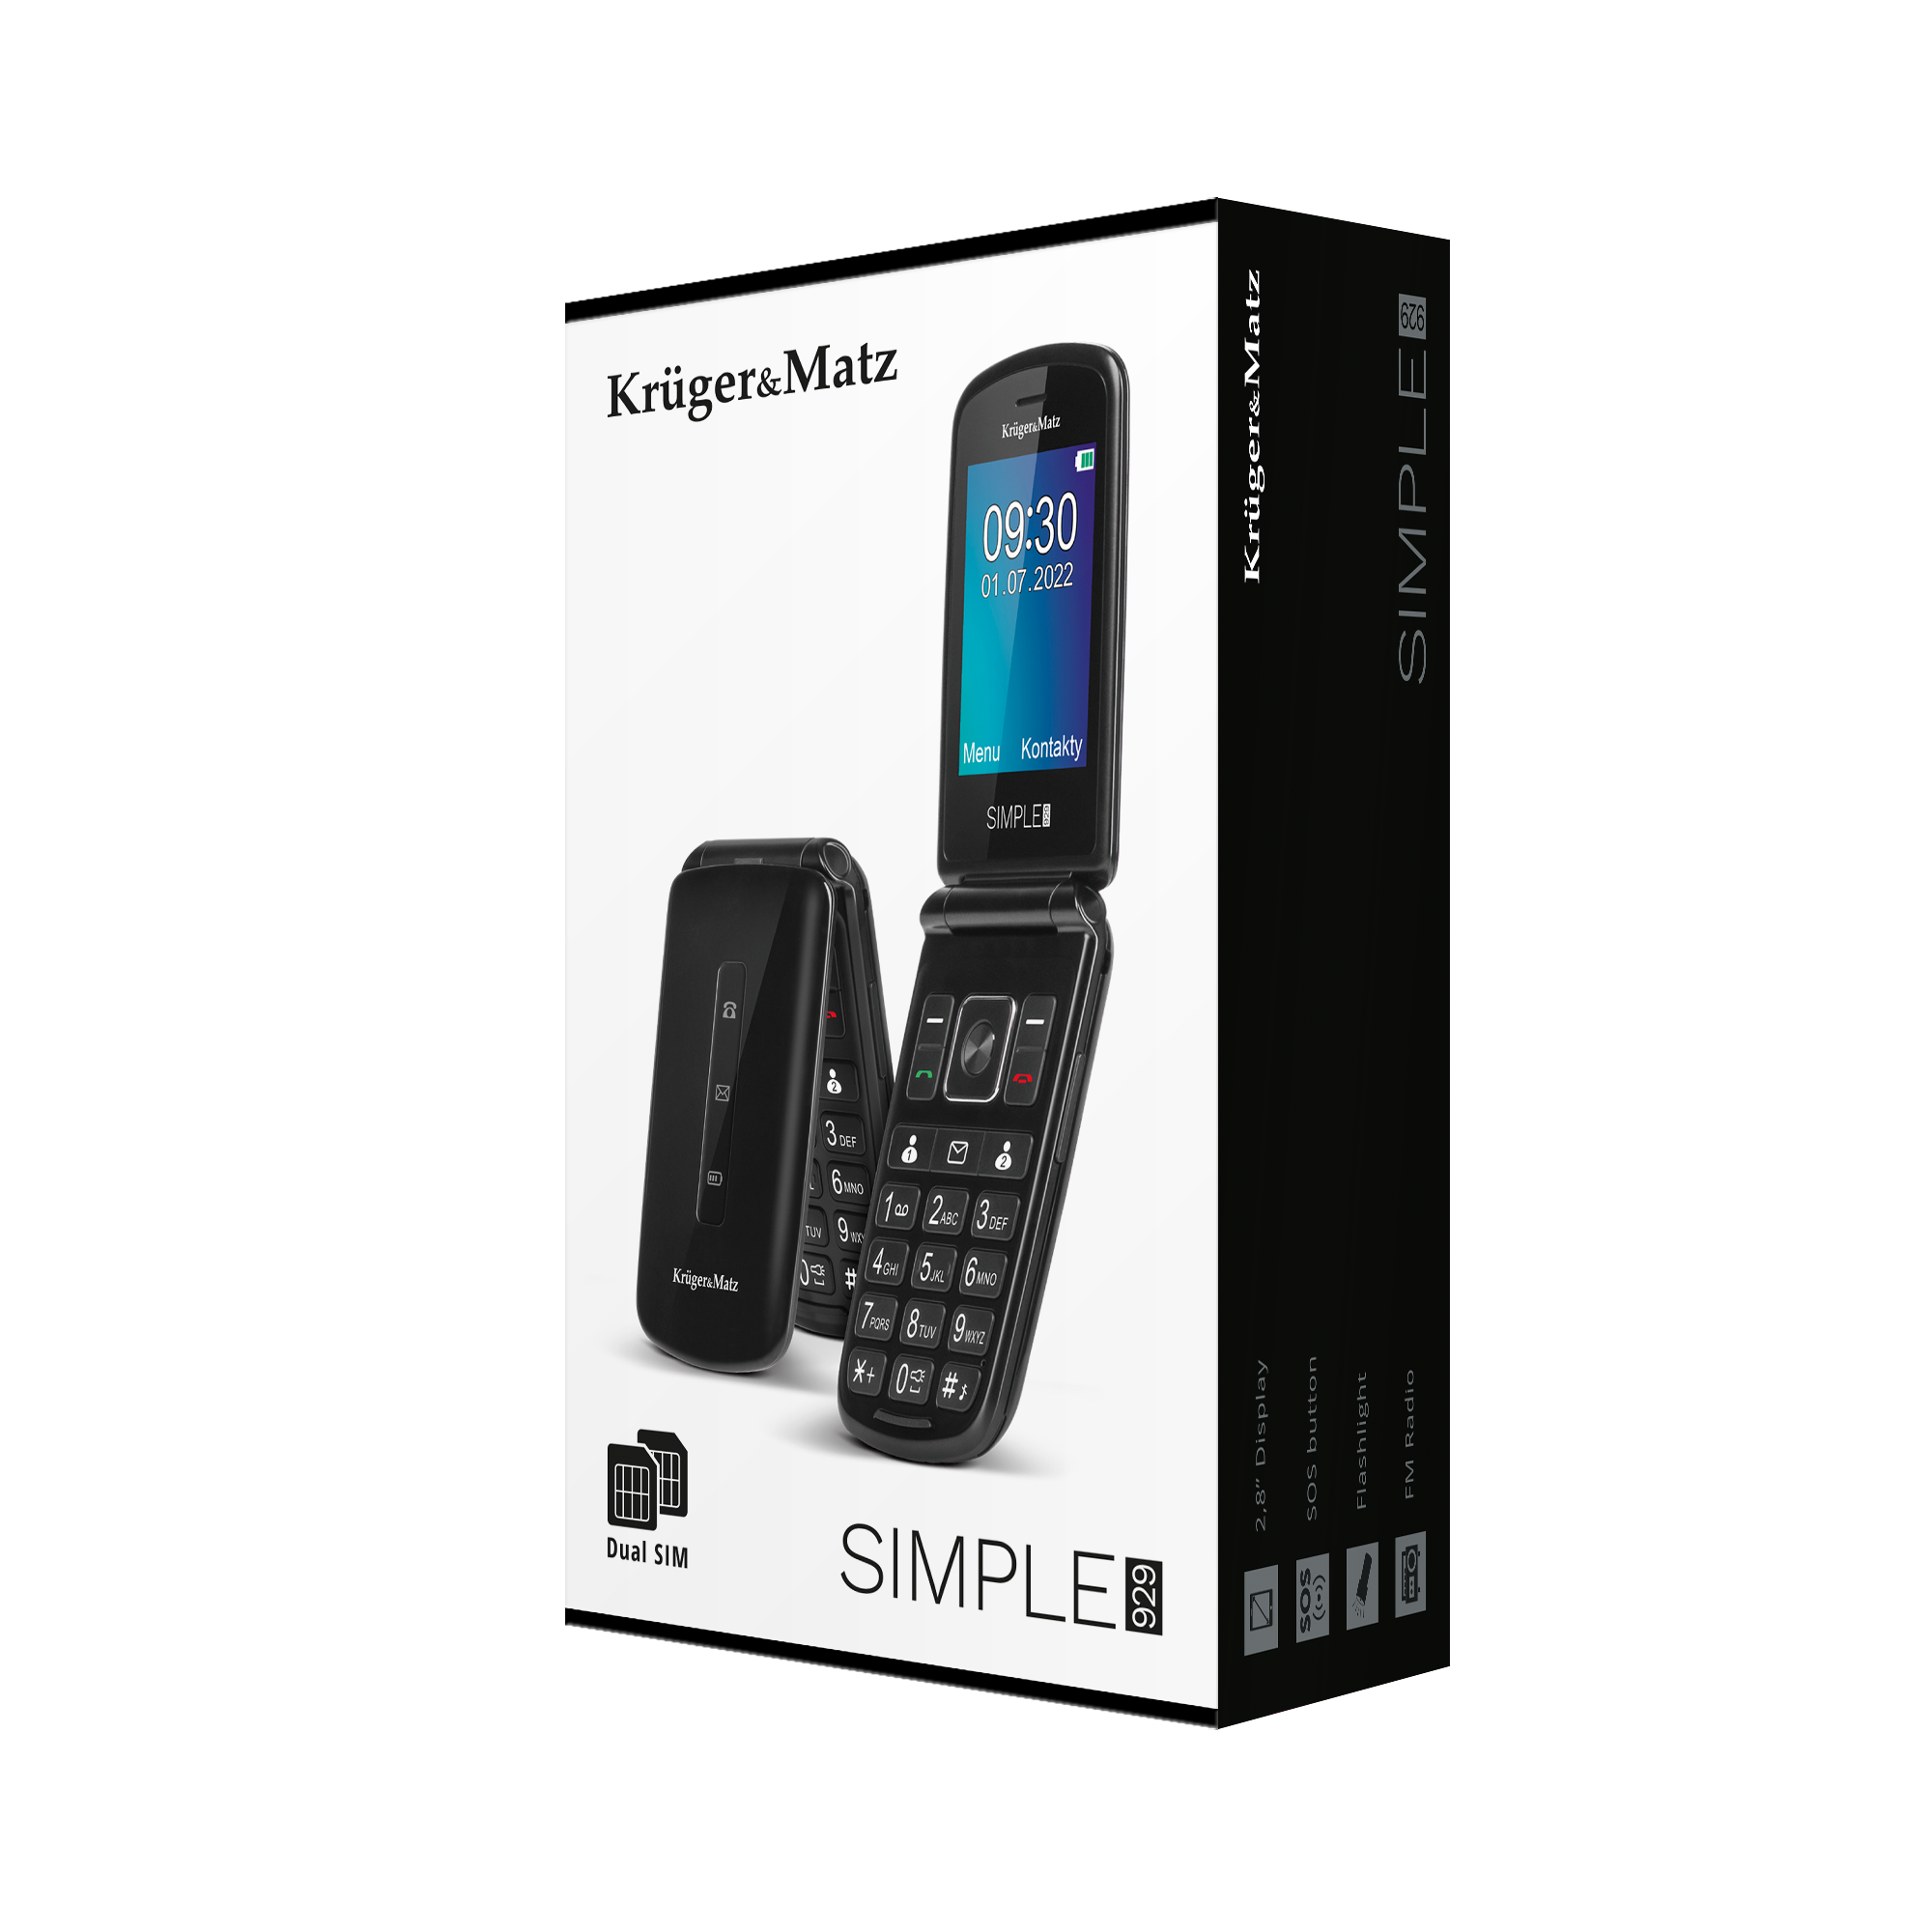 telefon-gsm-dla-seniora-kruger-matz-simple-929-098e8016c3f644c5b80c2b084ac73965-54504880